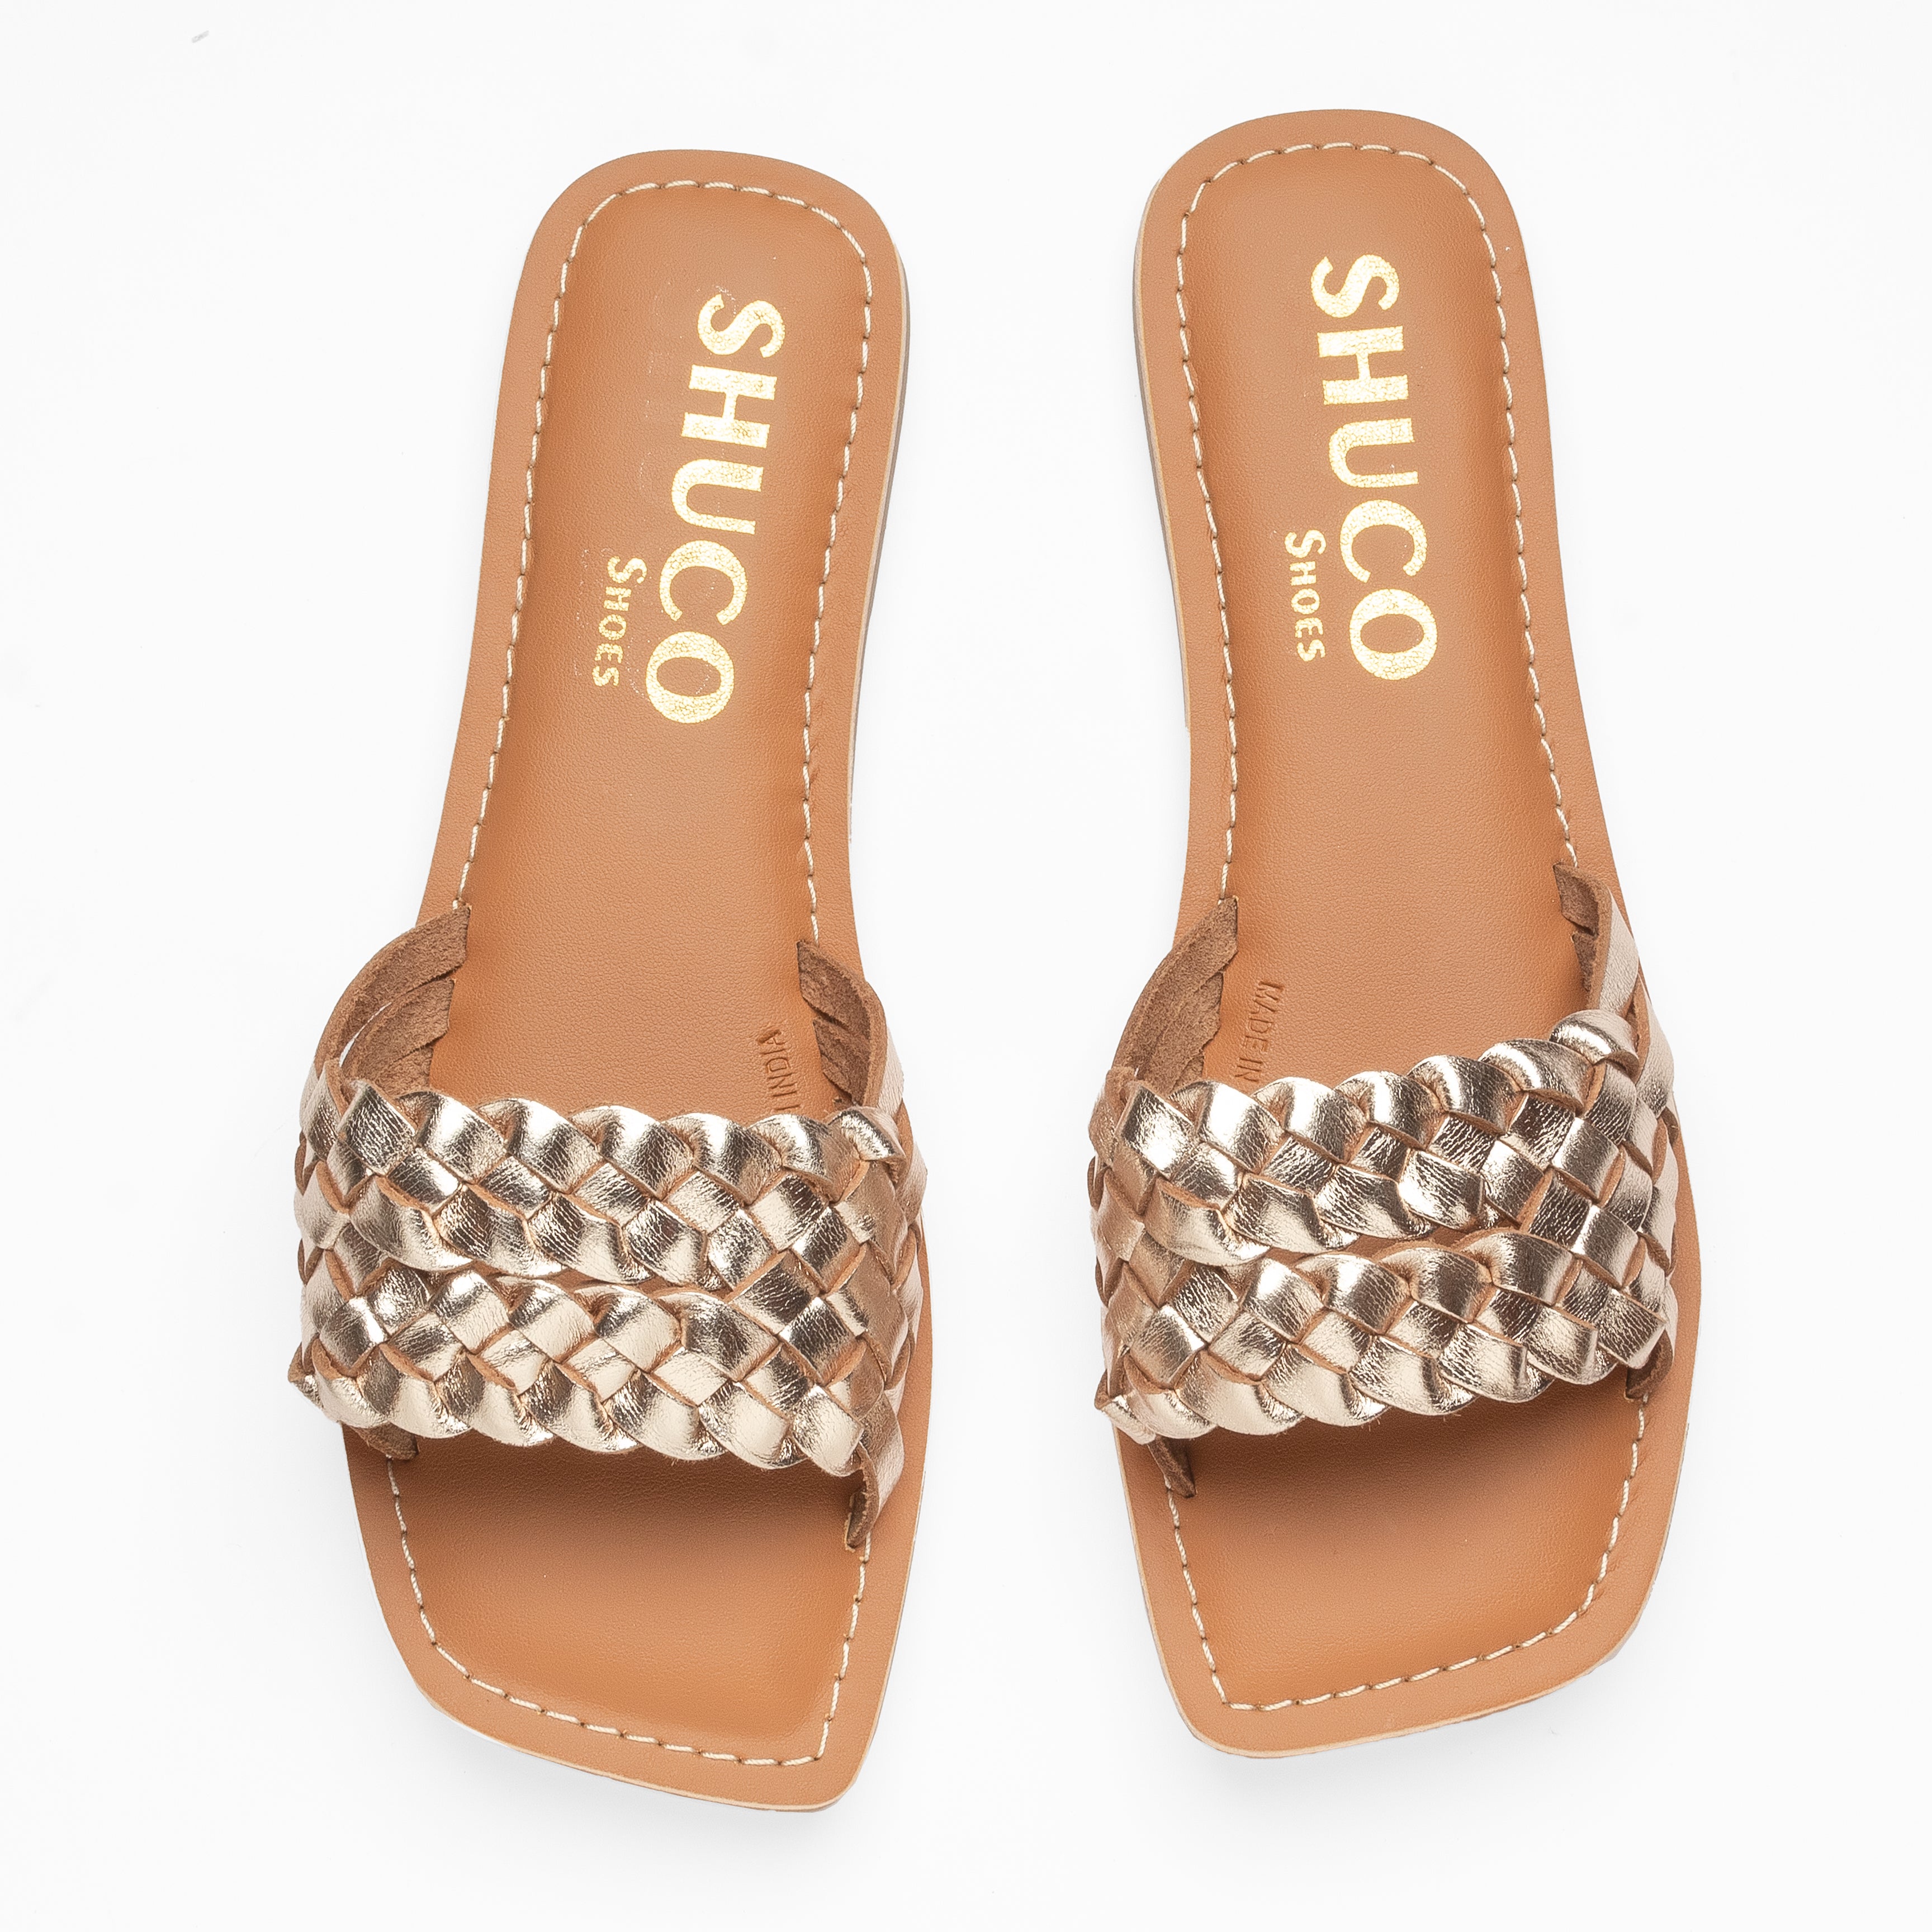 Buy Brown Flat Sandals for Women by Bata Online | Ajio.com